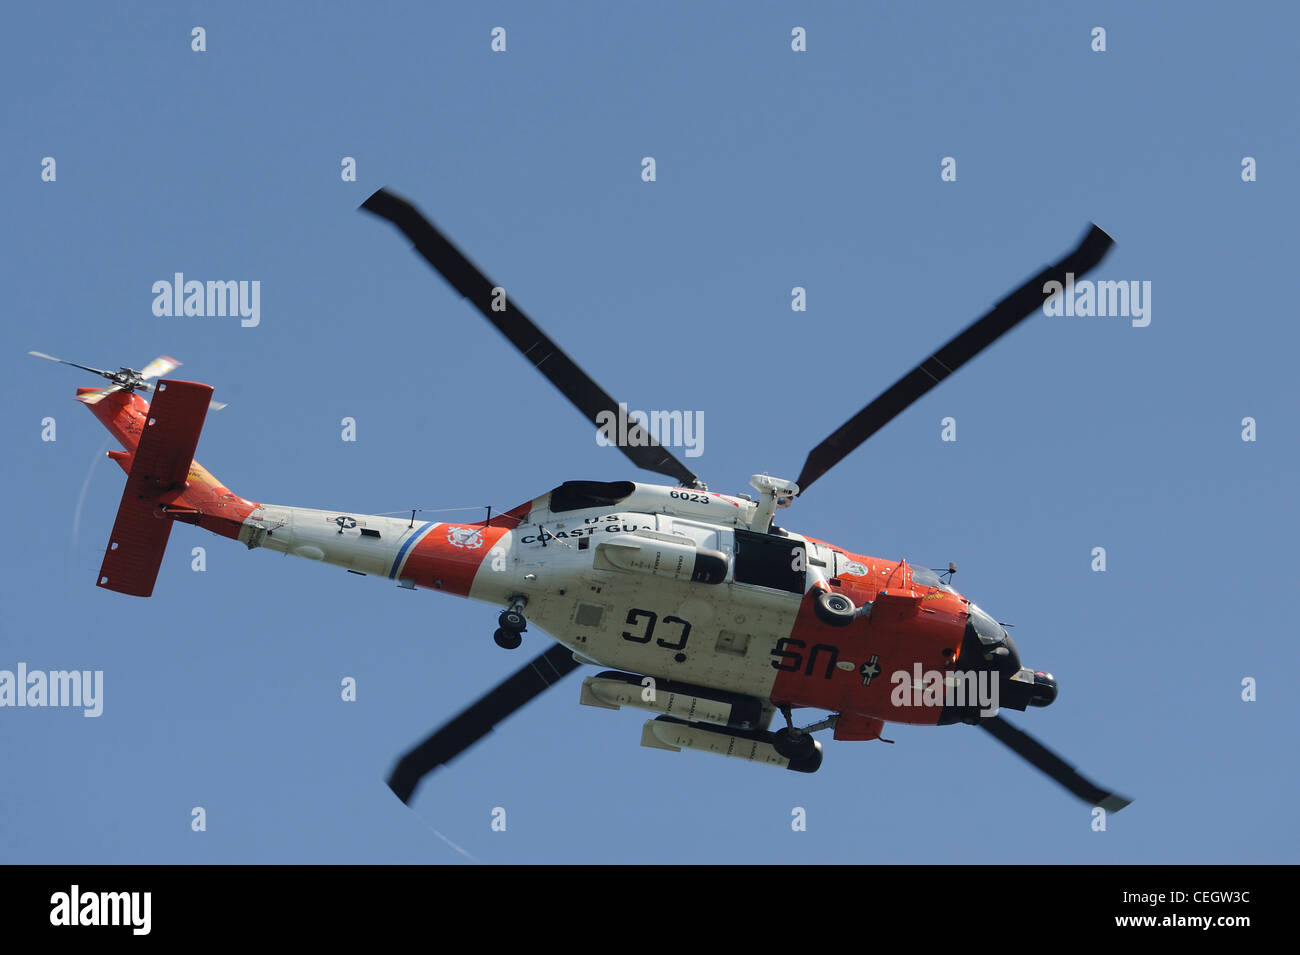 us coast guard sh-60 seahawk helicopter Stock Photo